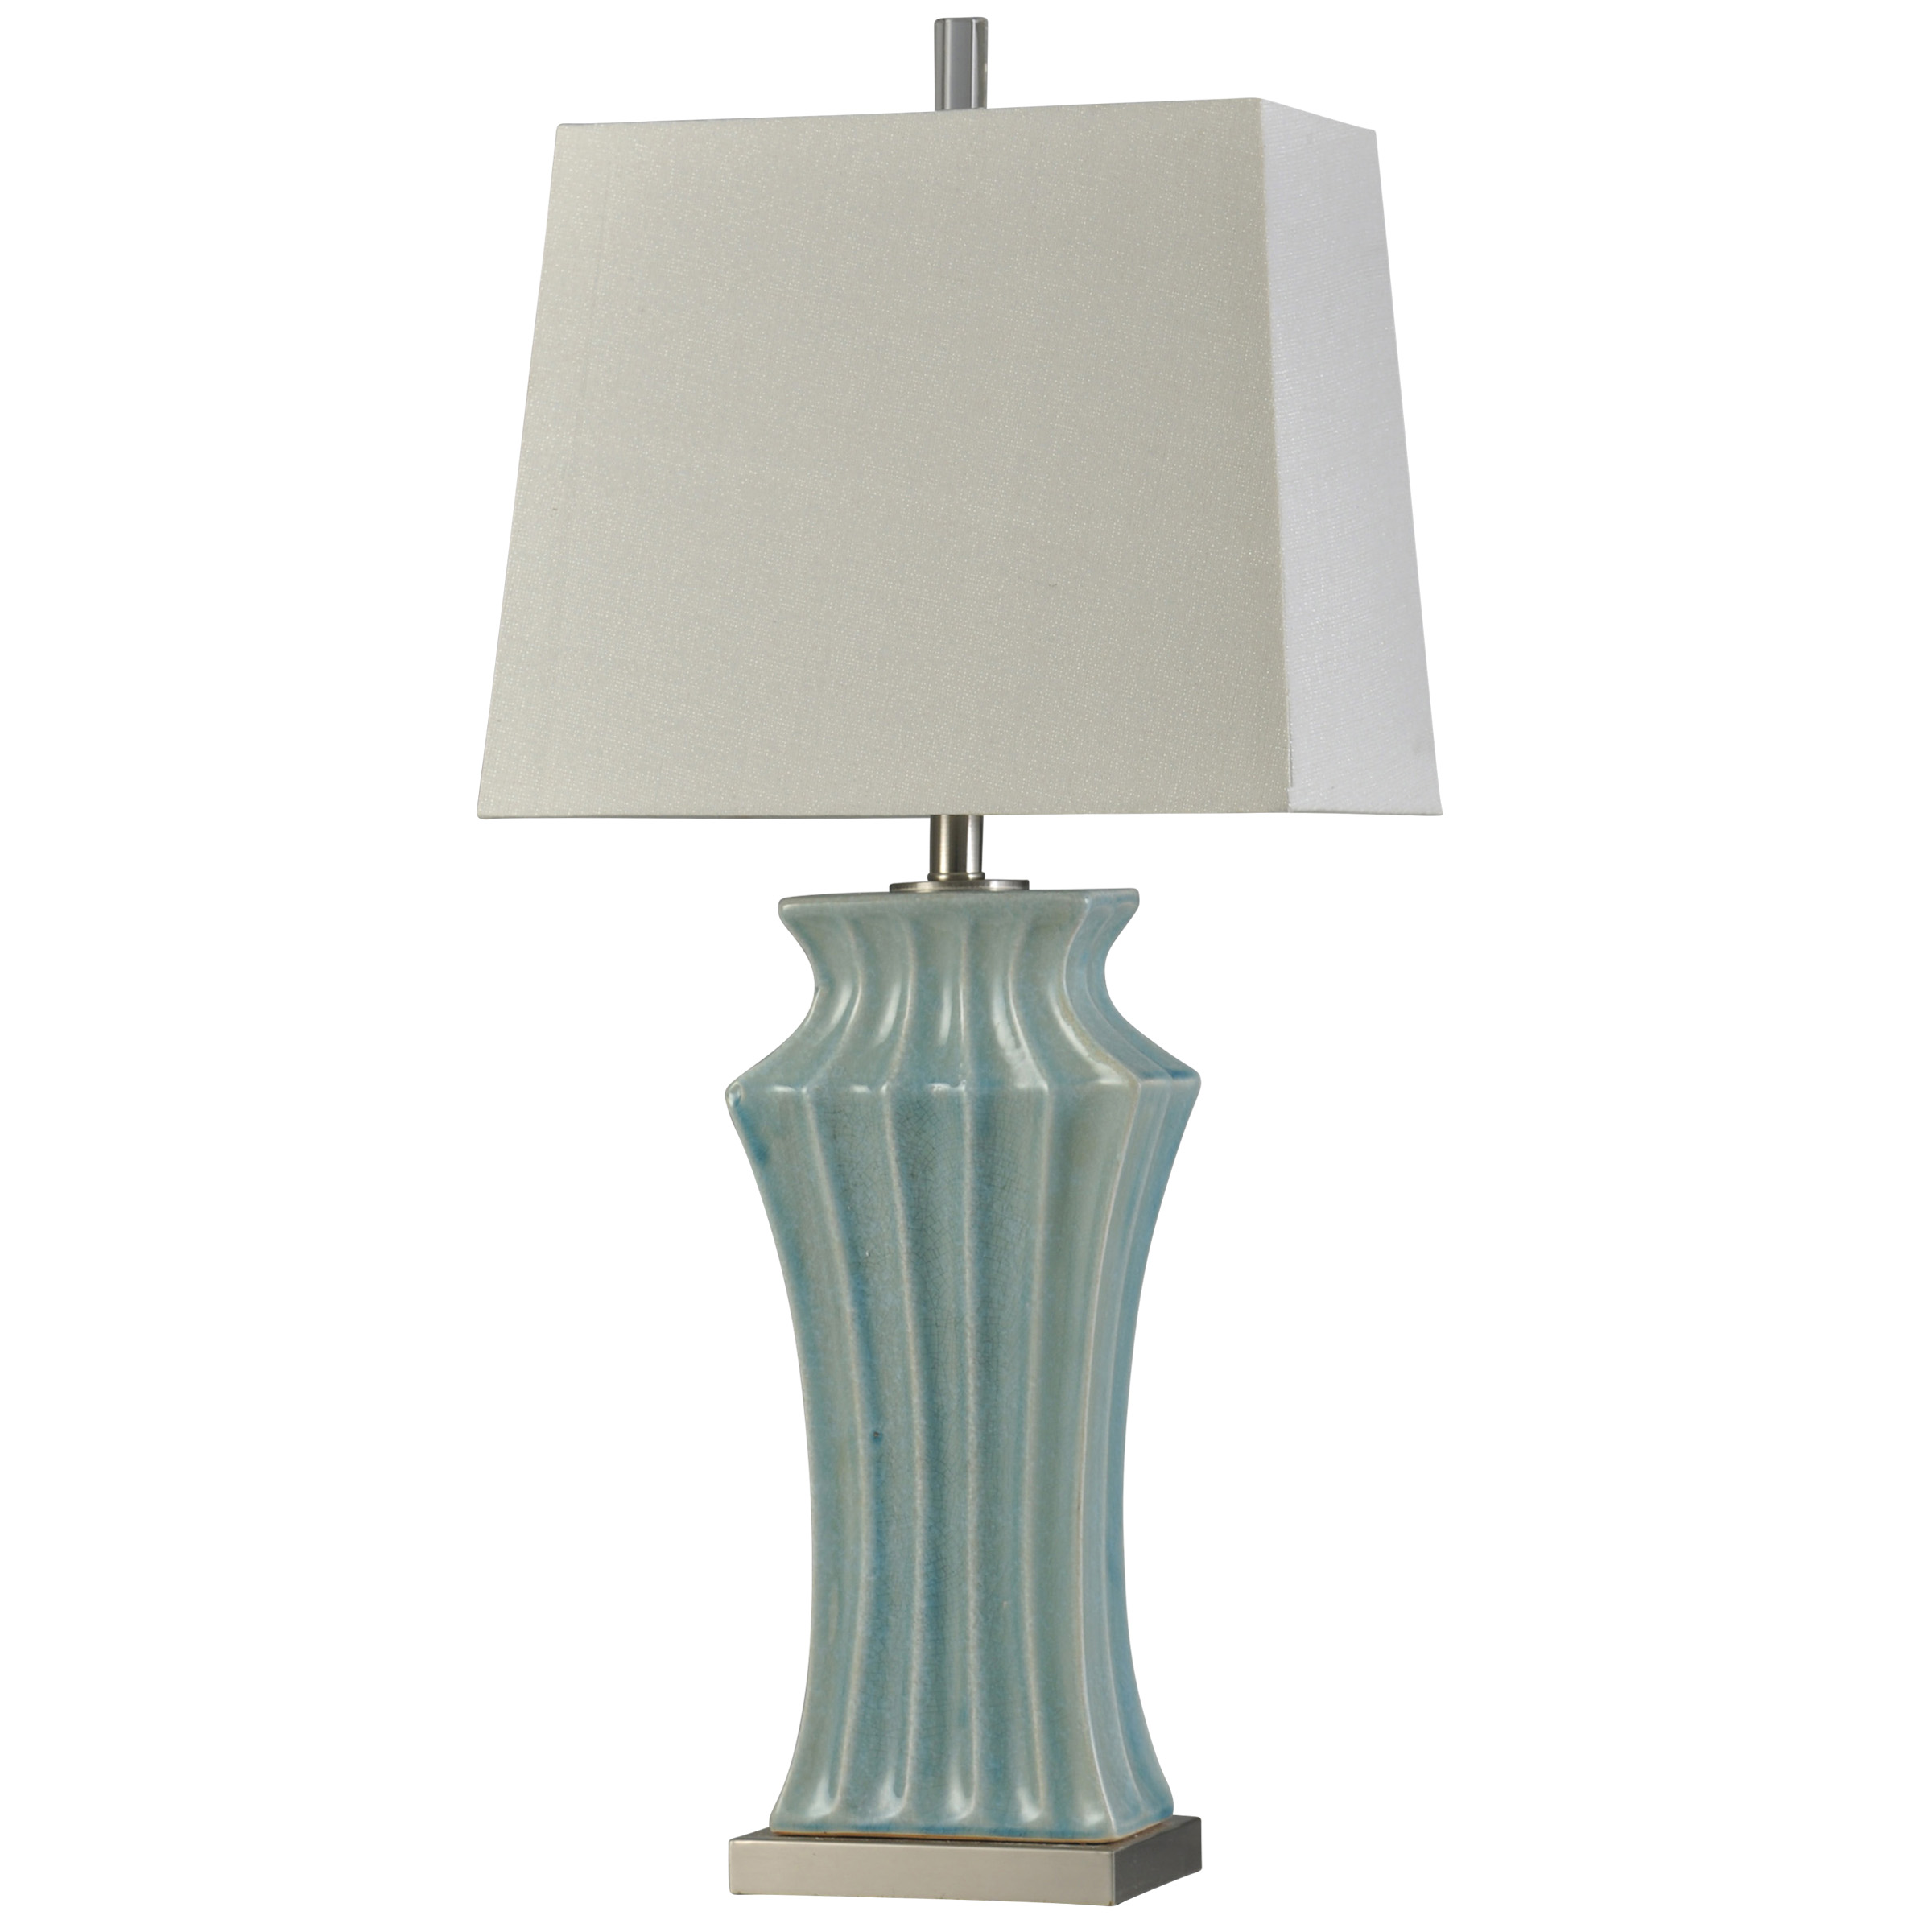 StyleCraft-Kipling-Blue-table-lamp